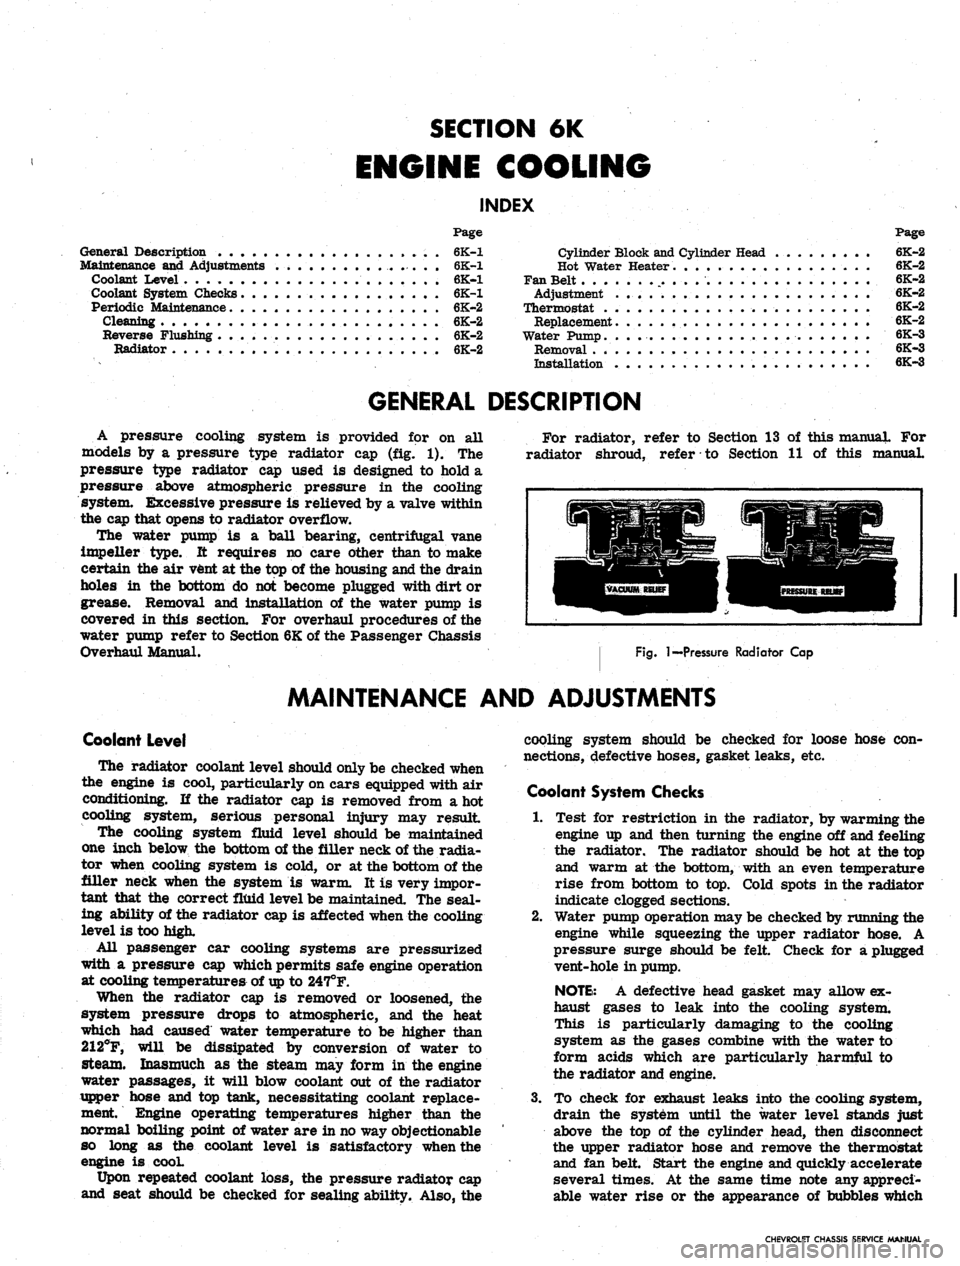 CHEVROLET CAMARO 1967 1.G Chassis Workshop Manual 
SECTION 6K

ENGINE COOLING

INDEX

Page

General Description . . . 6K-1

Maintenance and Adjustments 6K-1

Coolant Level 6K-1

Coolant System Checks 6K-1

Periodic Maintenance 6K-2

Cleaning 6K-2

Re